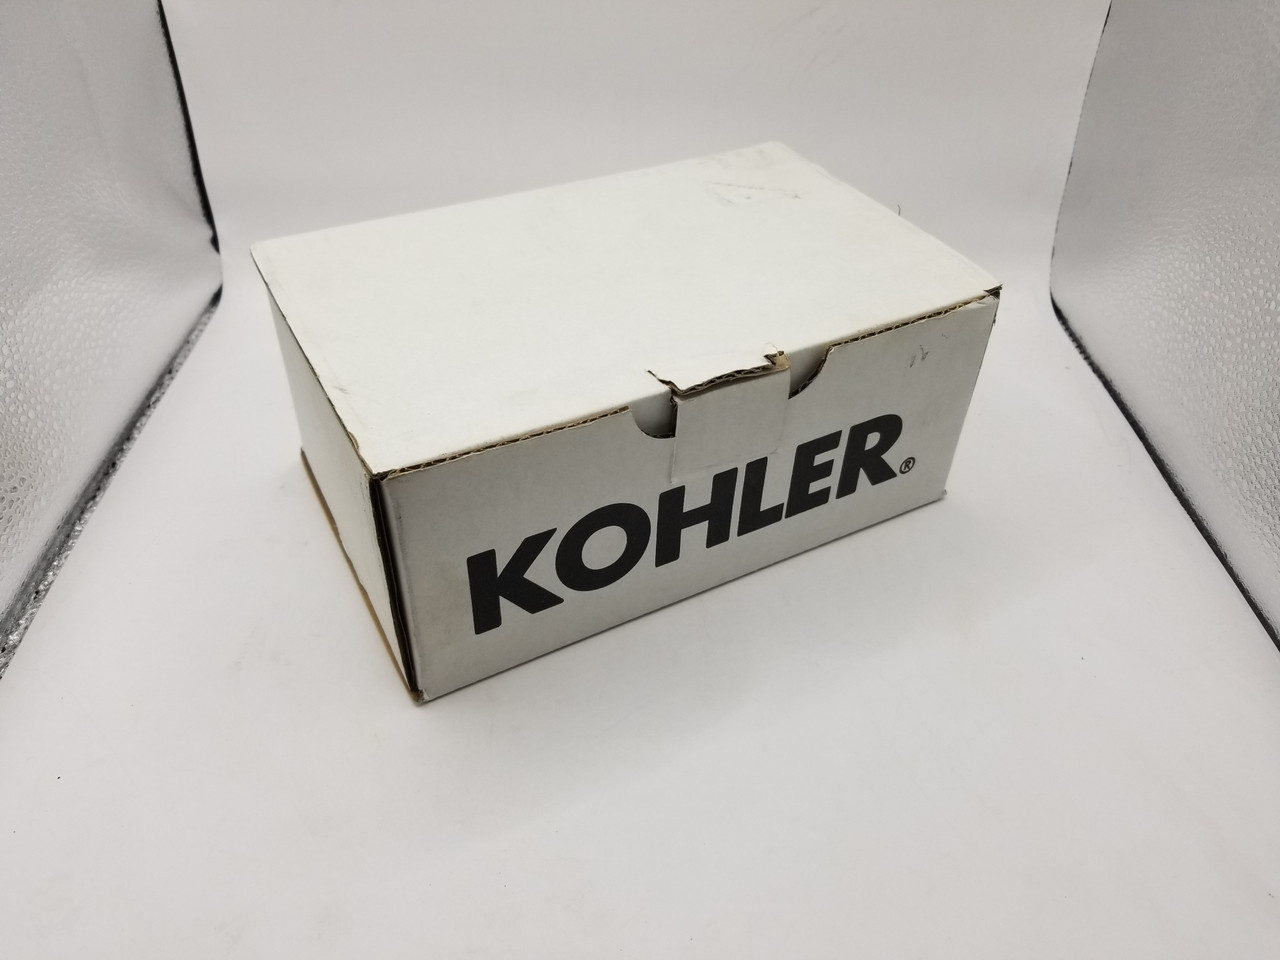 Kit, Starter A-236292-SKOH package std